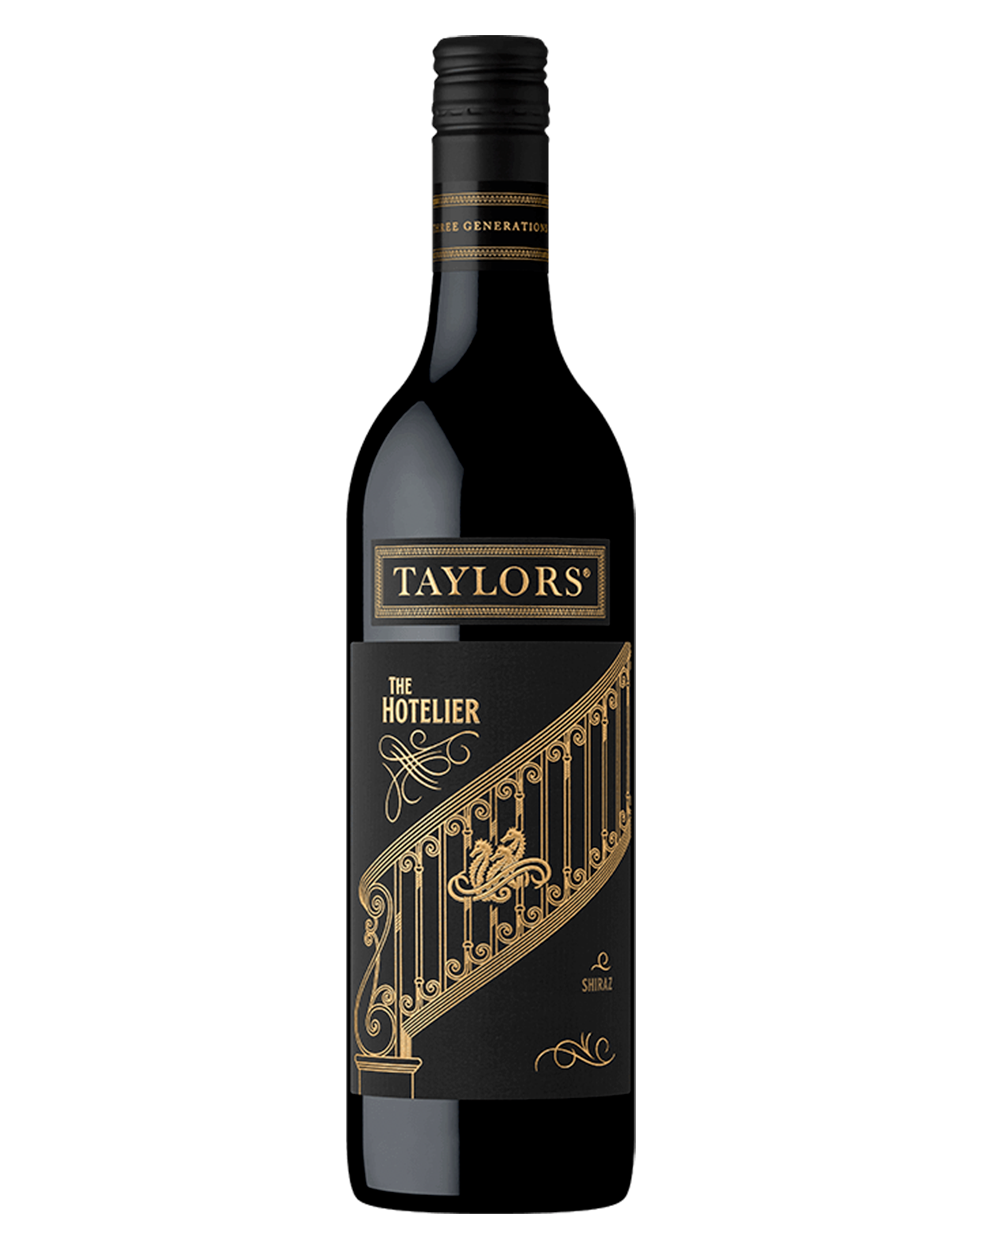 Taylors-The-Hotelier-Shiraz